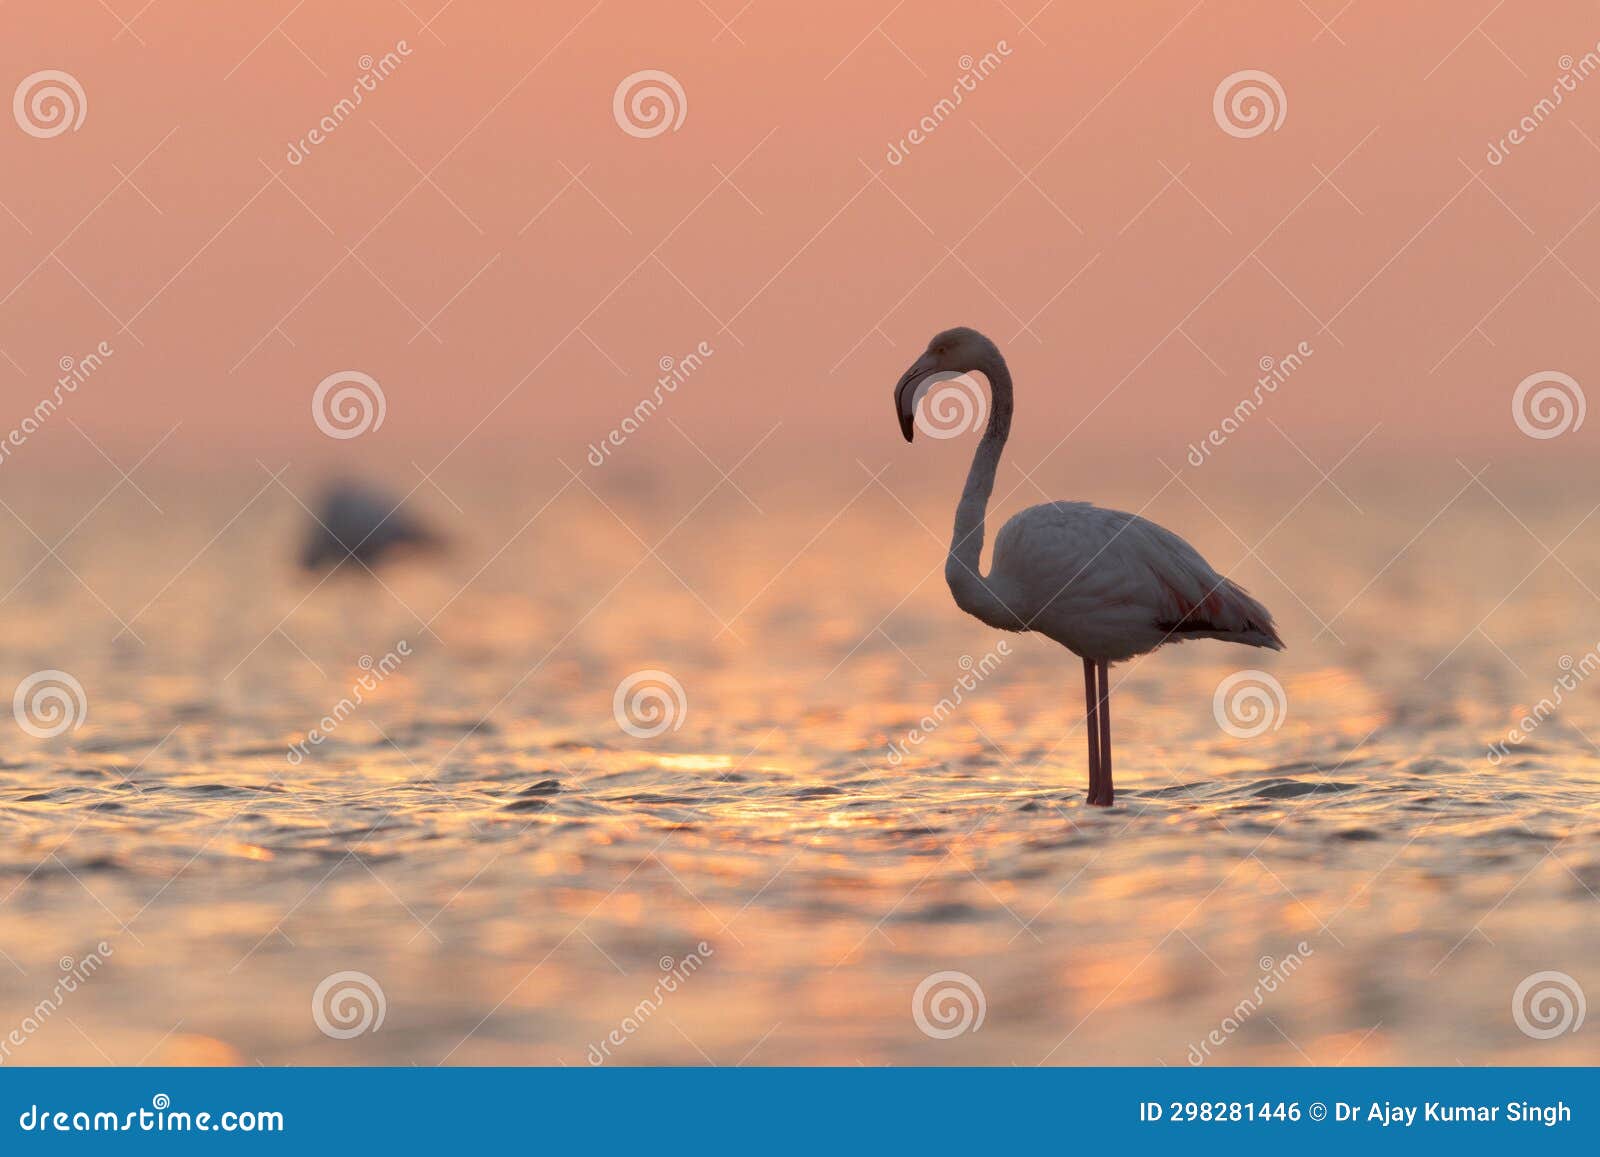 greater flamingos during sunrise at asker coast, bahrain